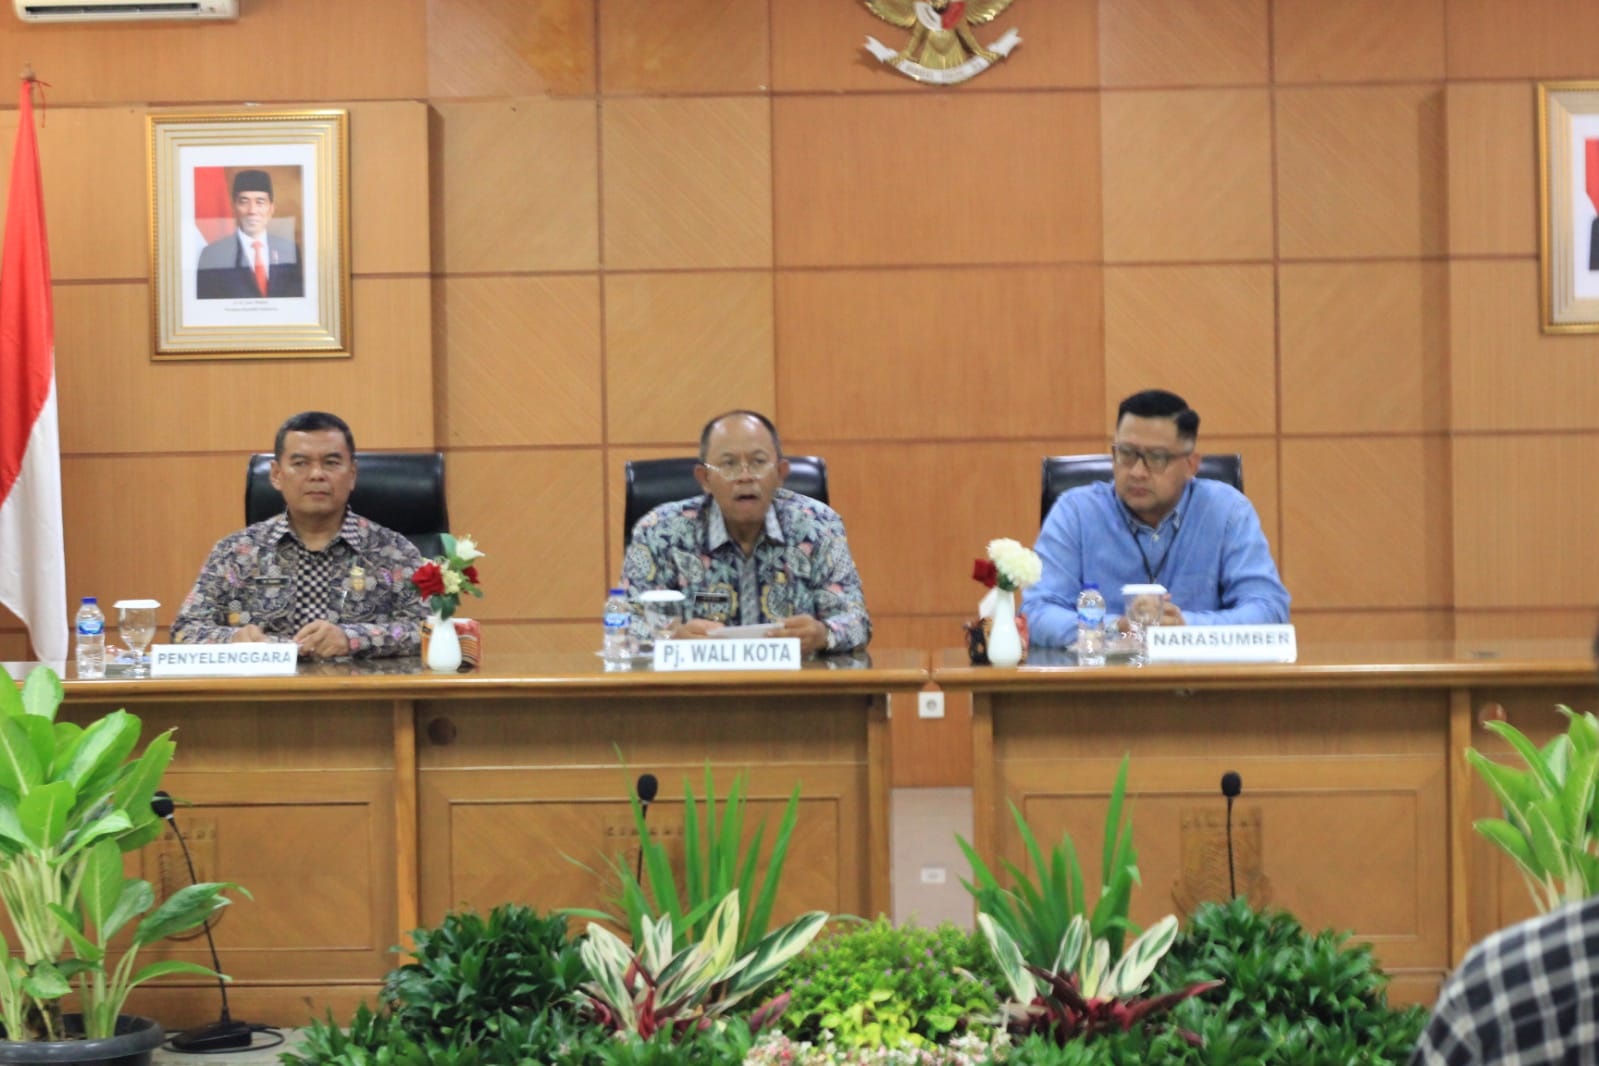 Pj Wali Kota Cimahi Dikdik S Nugrahawan (tengah) saat launching pajak daerah baru-baru ini bersama Bappenda Cimahi.